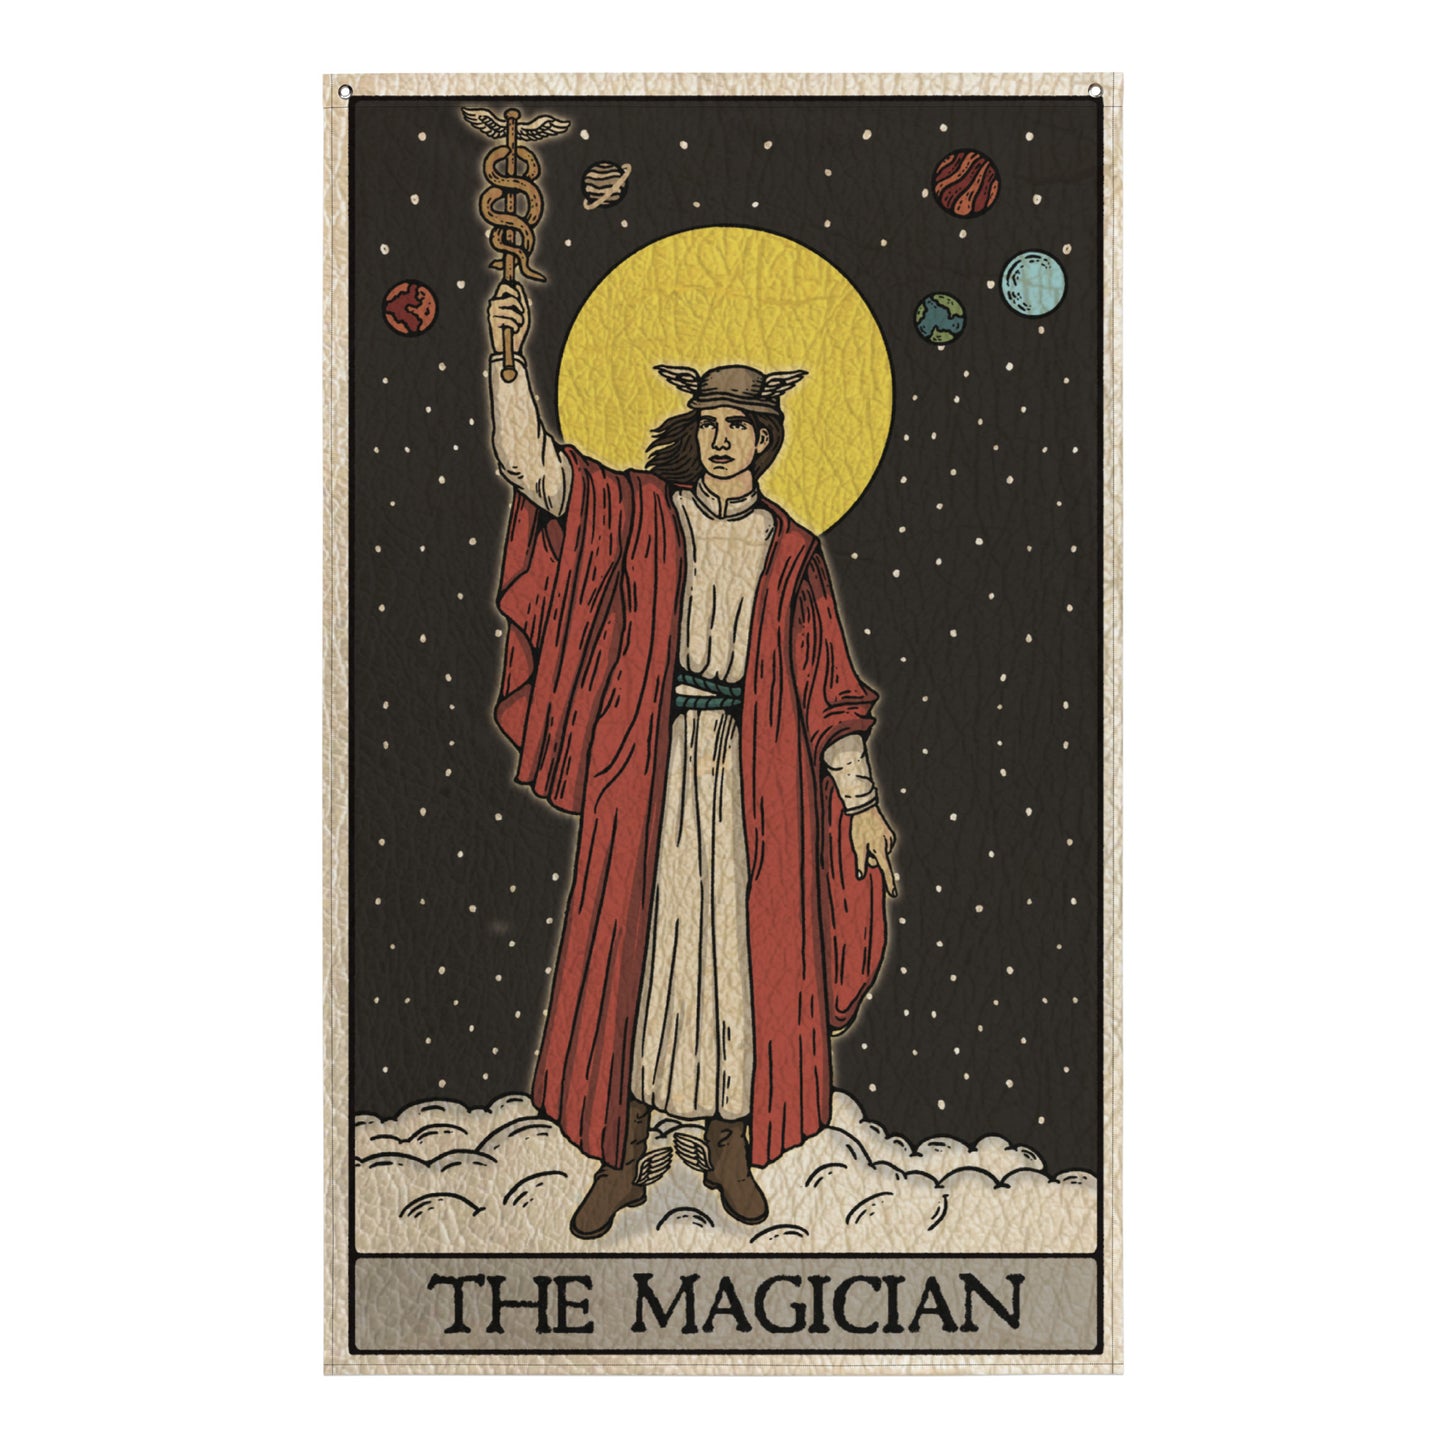 'The Magician' Tarot Card - Greek God Hermes Flag Tapestry